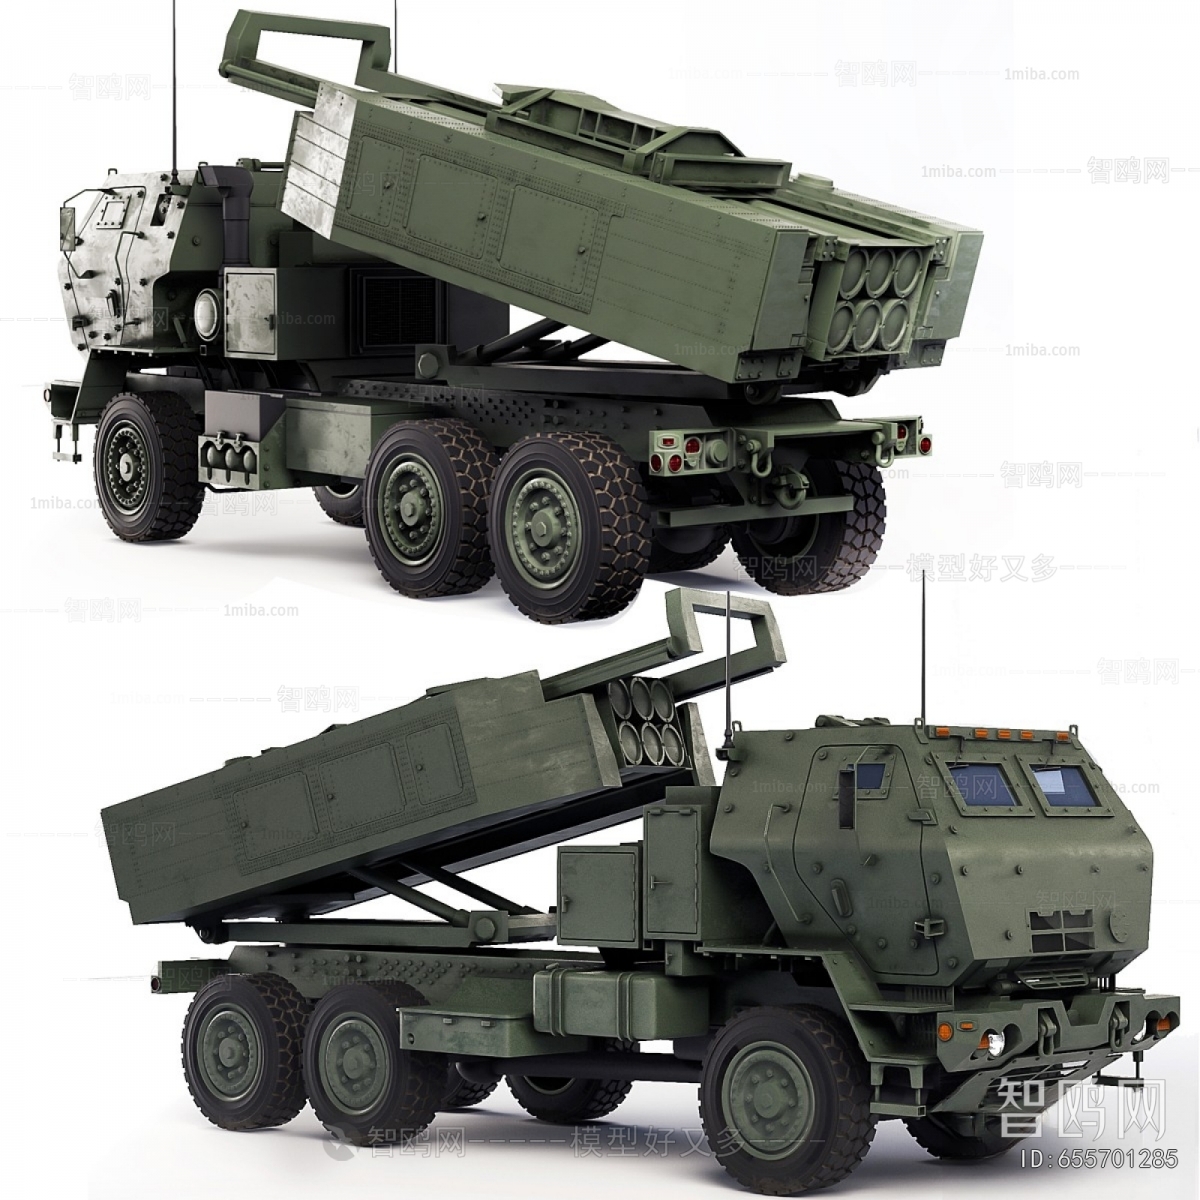 Modern Military Equipment